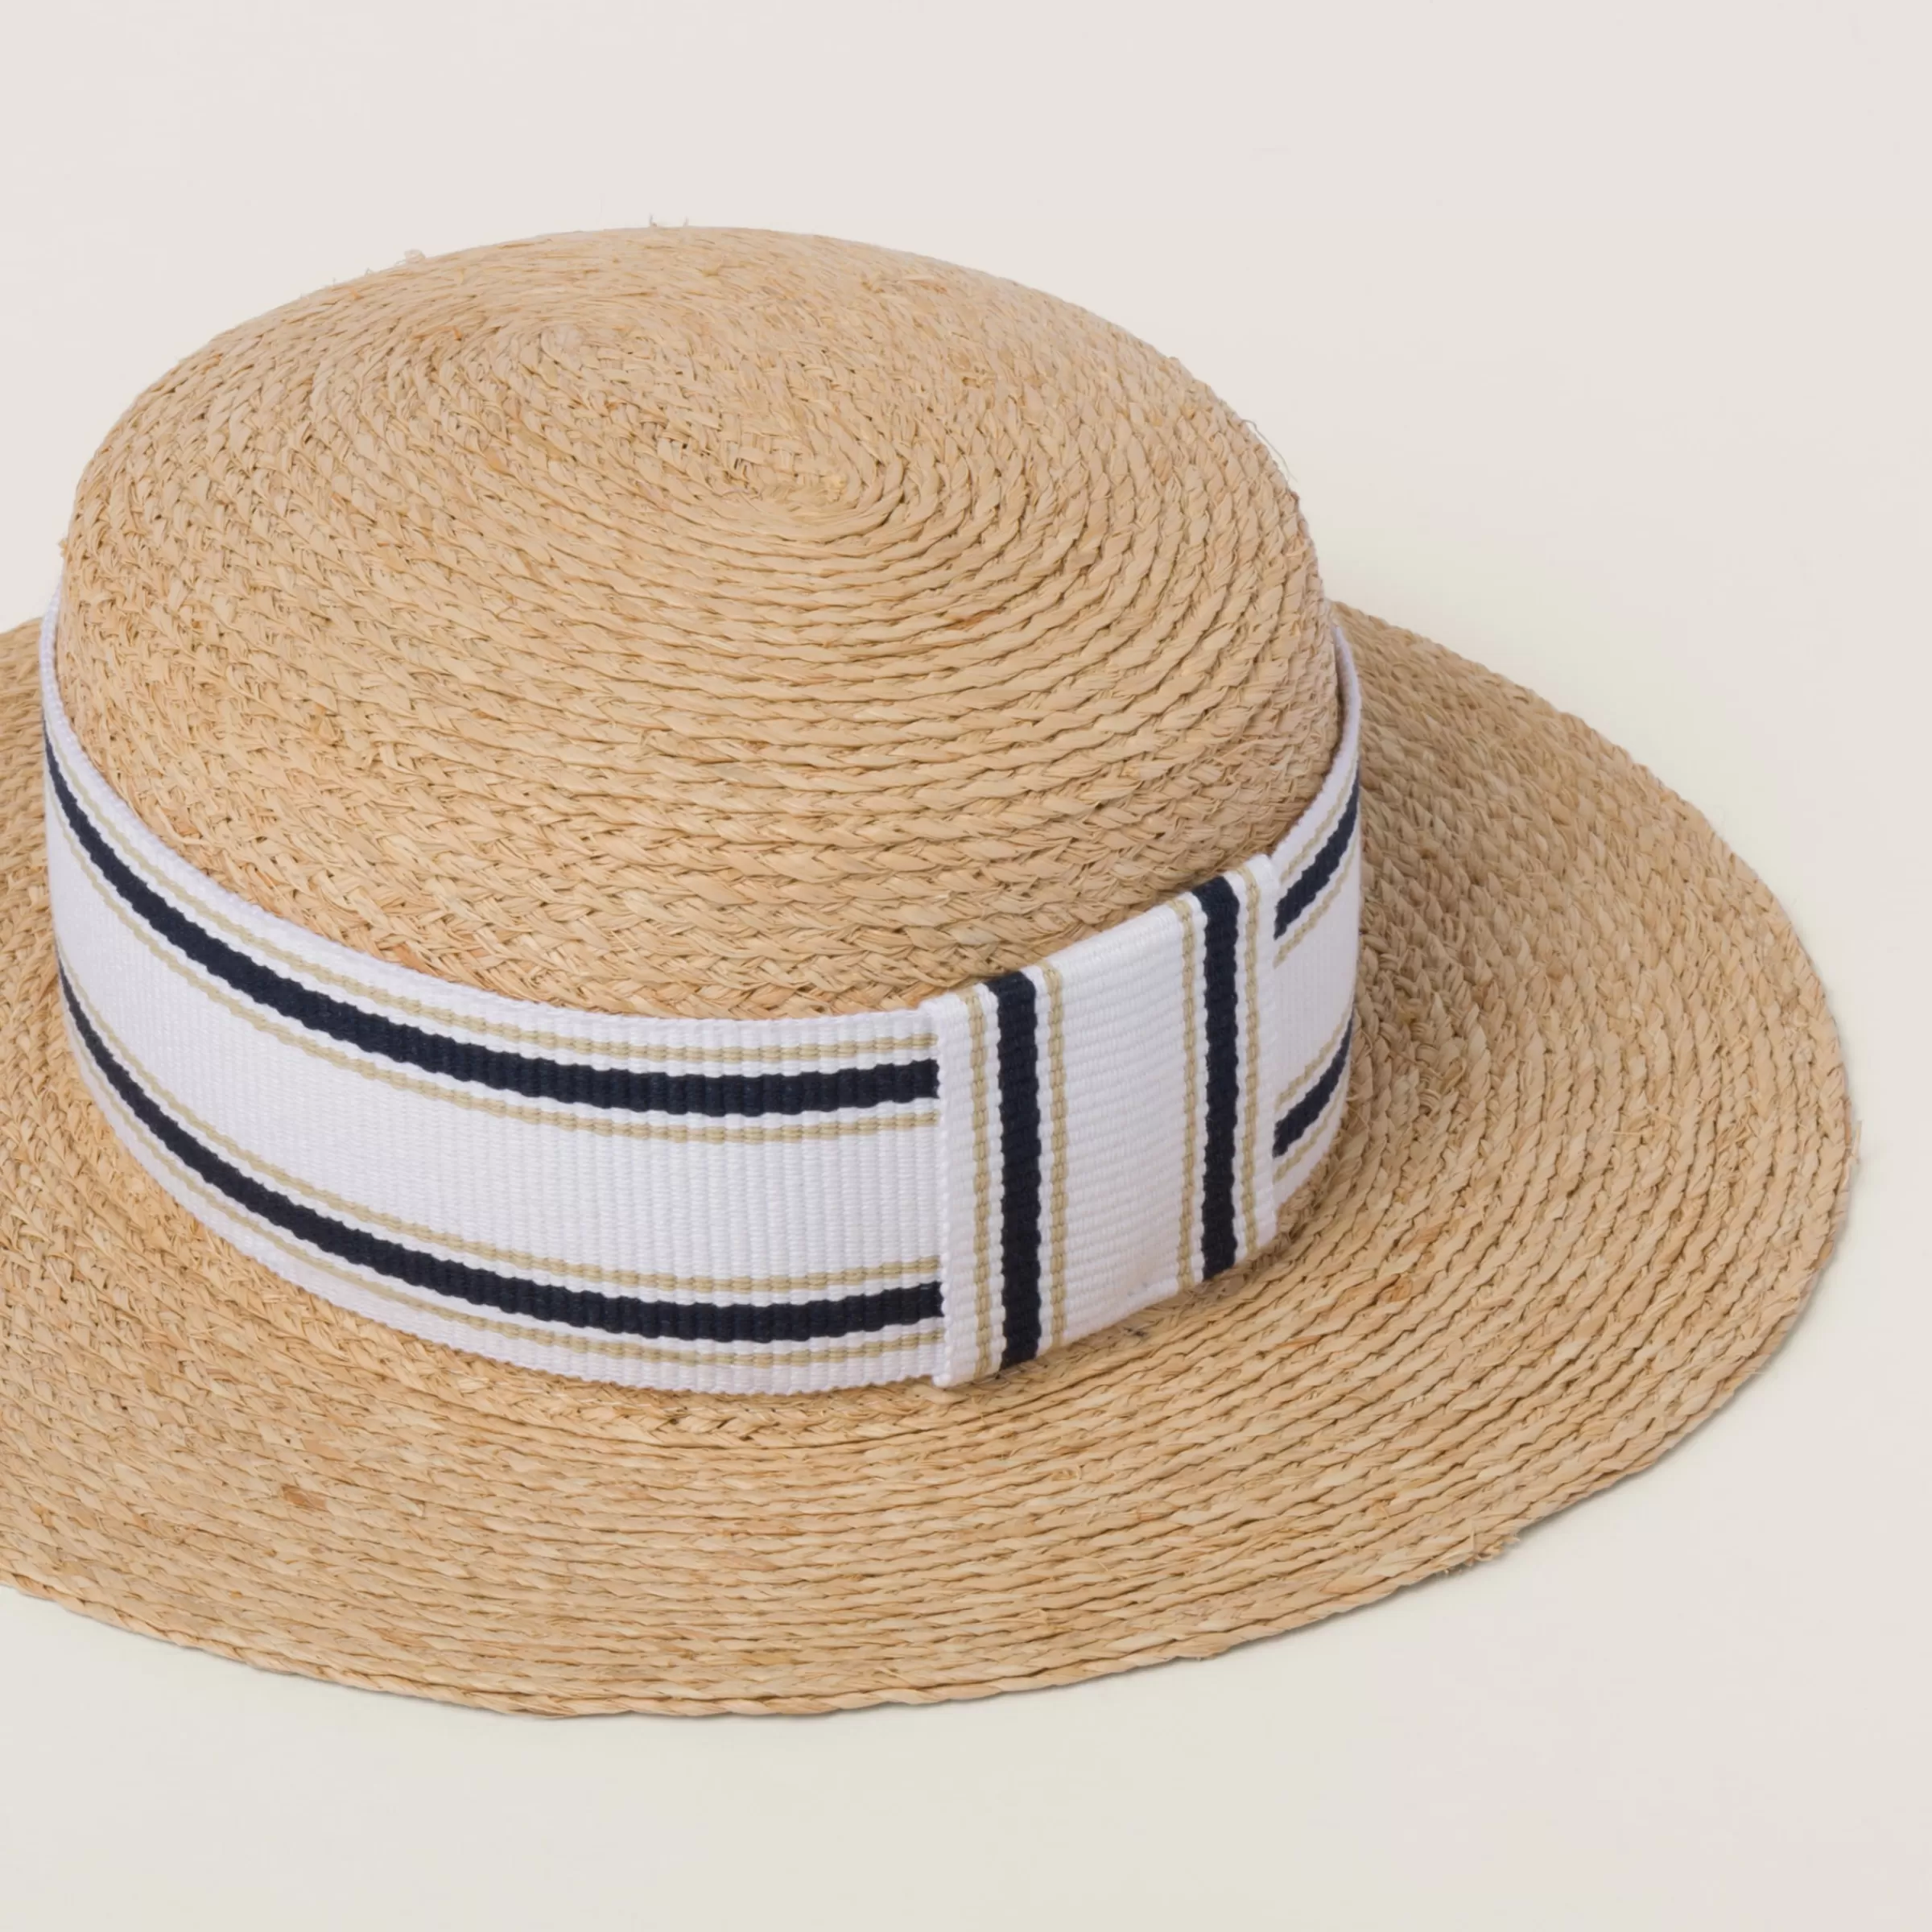 Miu Miu Woven Fabric Hat |